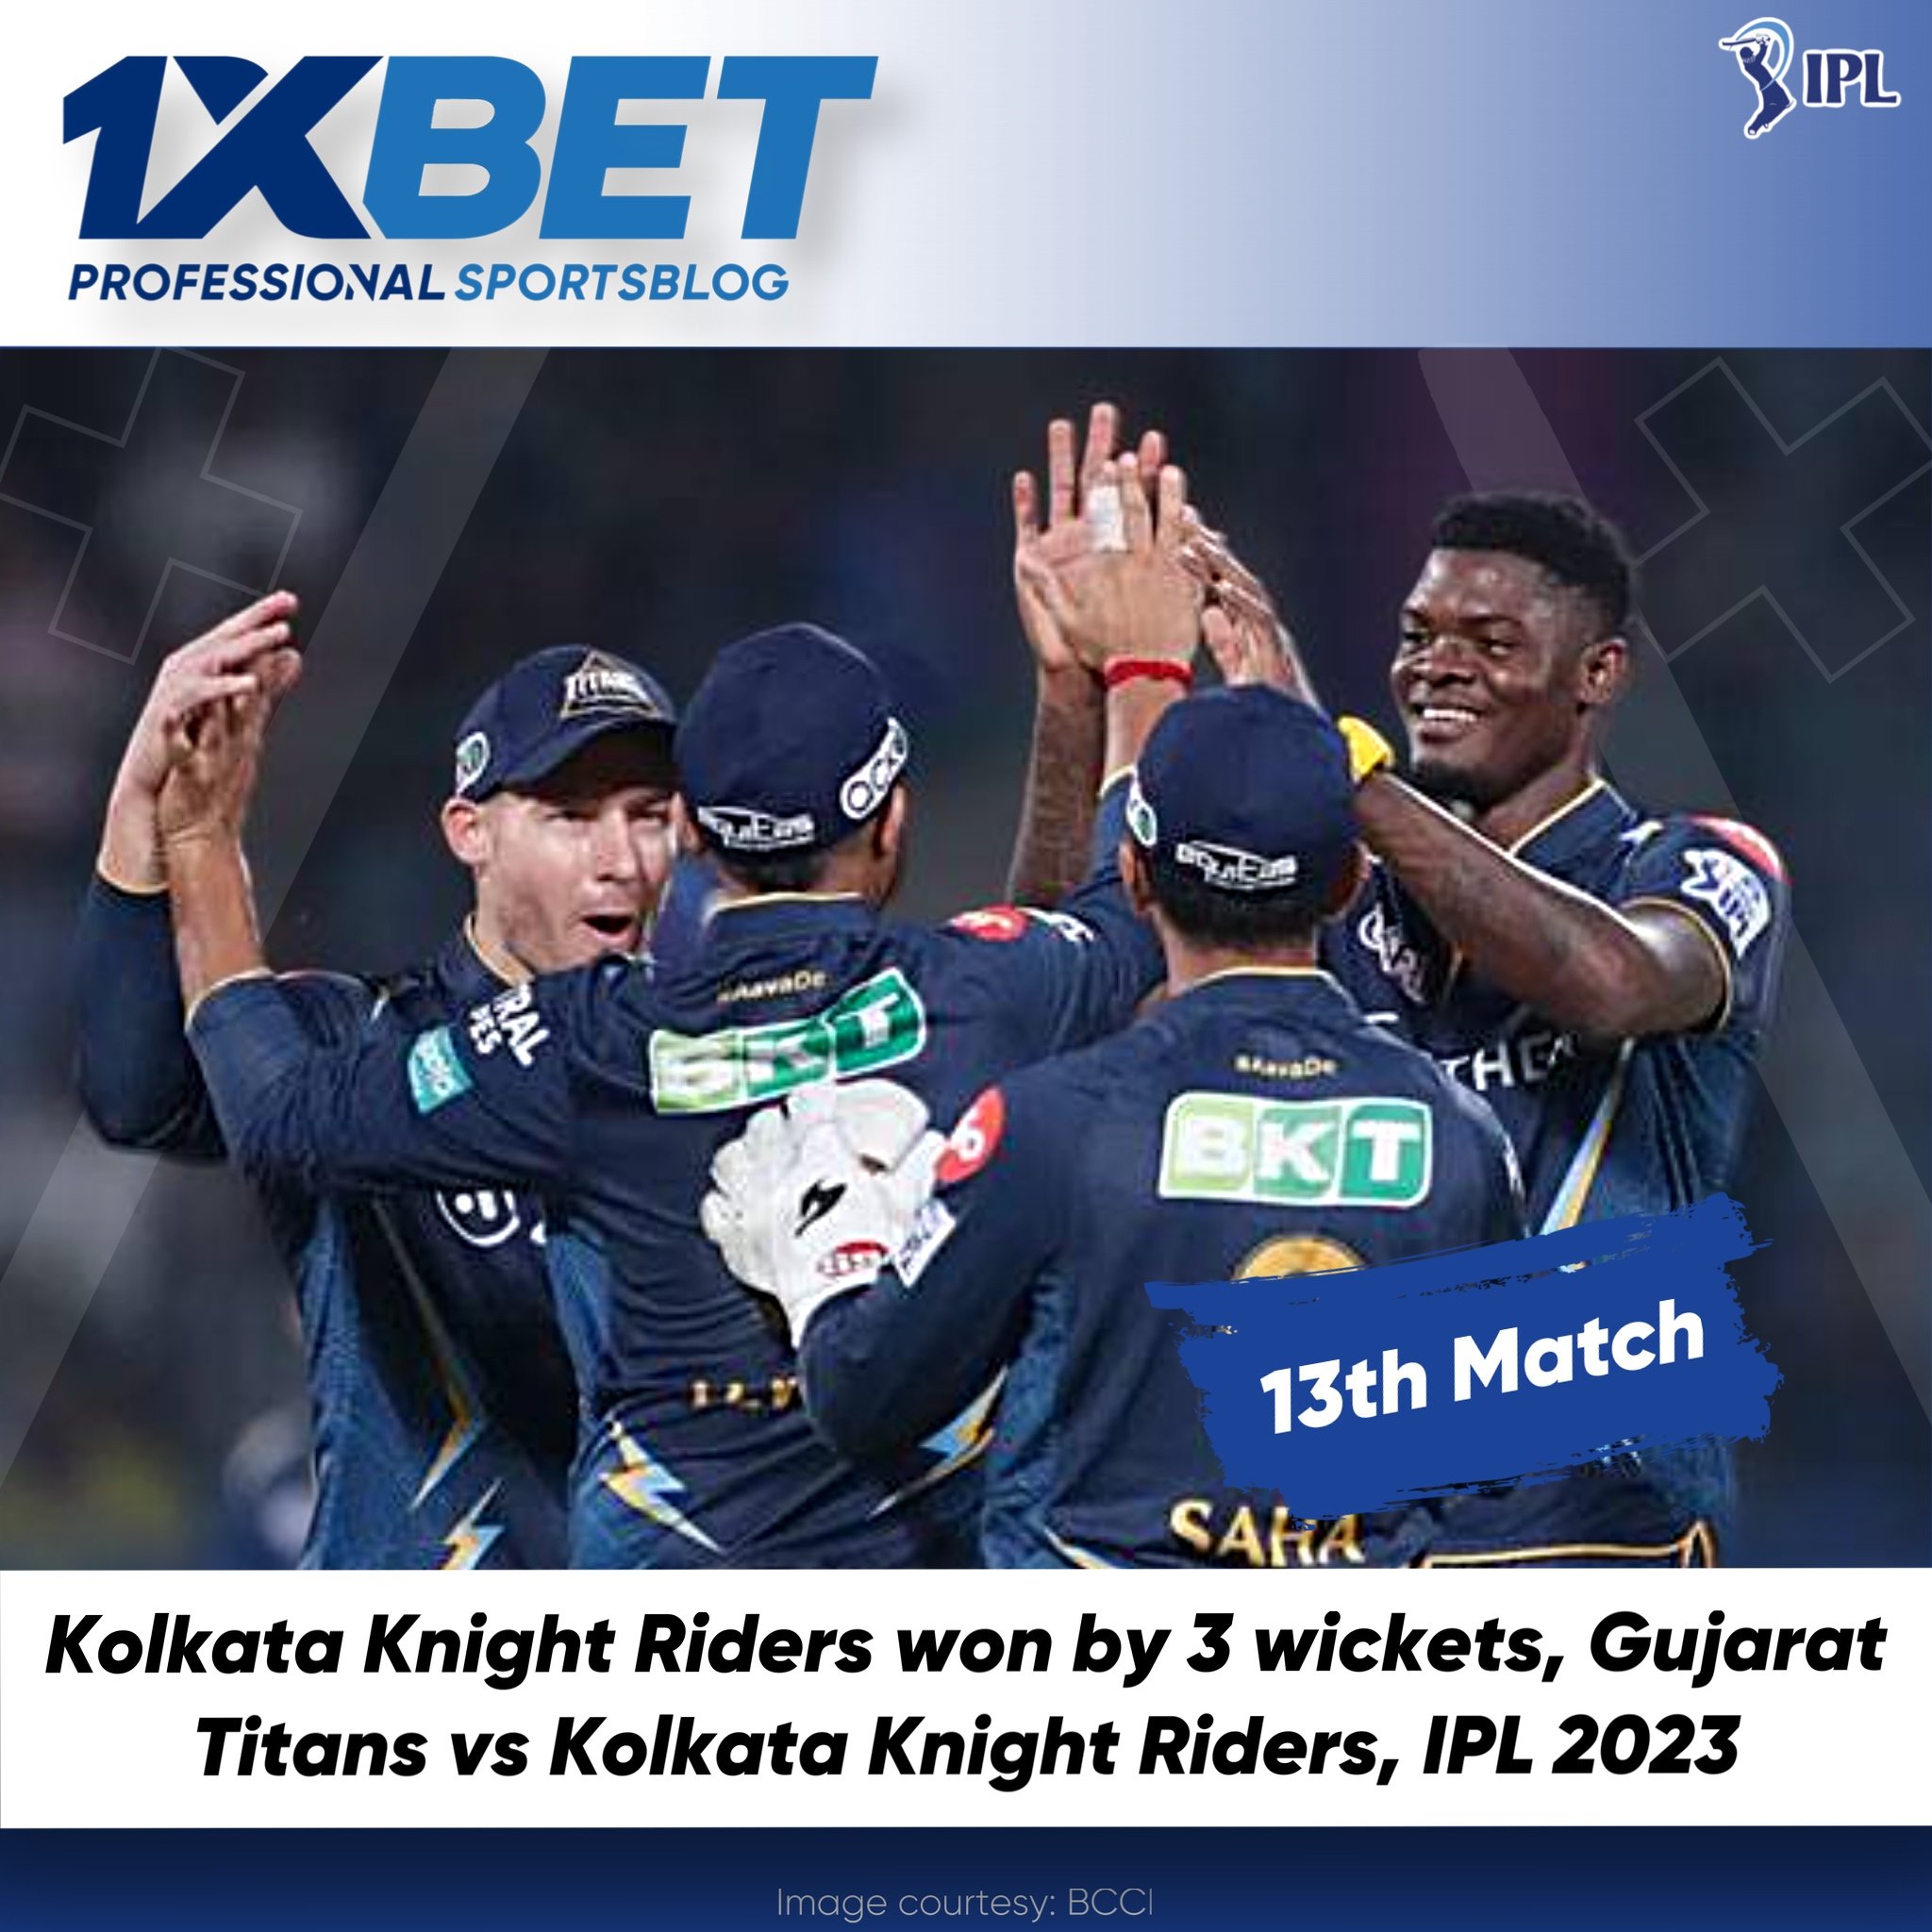 Kolkata Knight Riders won by 3 wickets